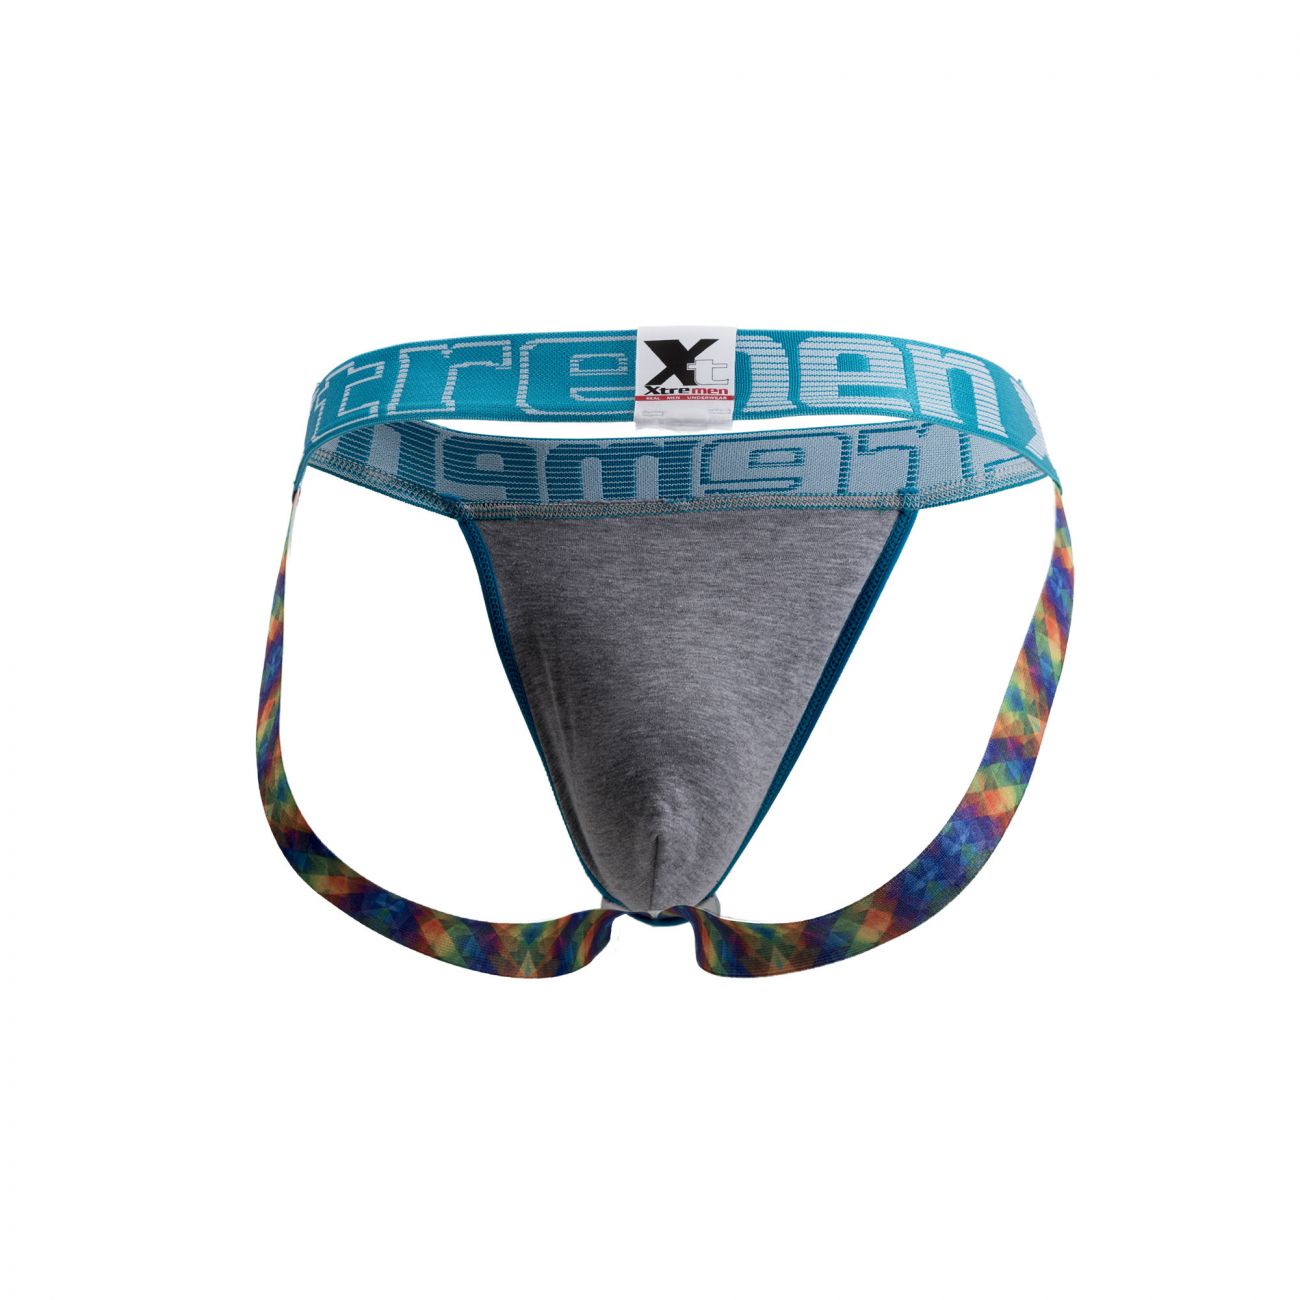 Mens Underwear: Xtremen 91033 Butt lifter Jockstrap | eBay